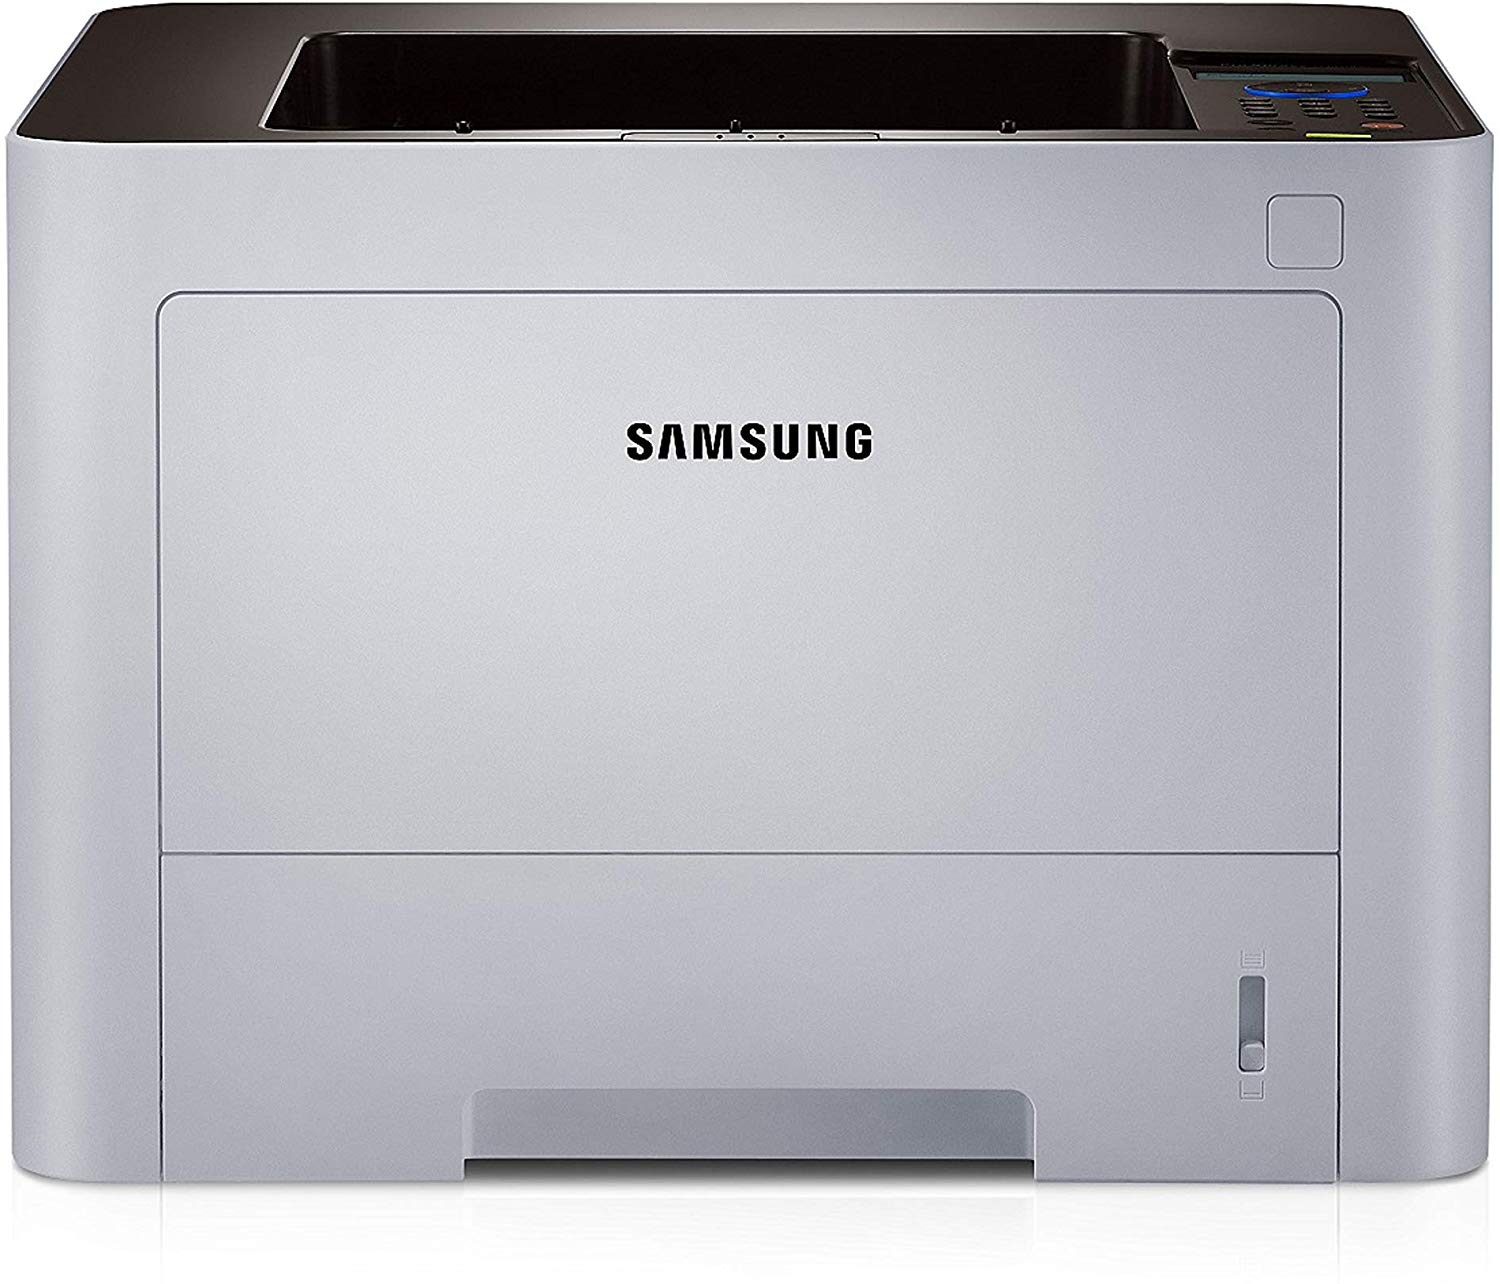 Samsung M3820Nd Laser Printer, Black/White Network Automatic monochrome duplex